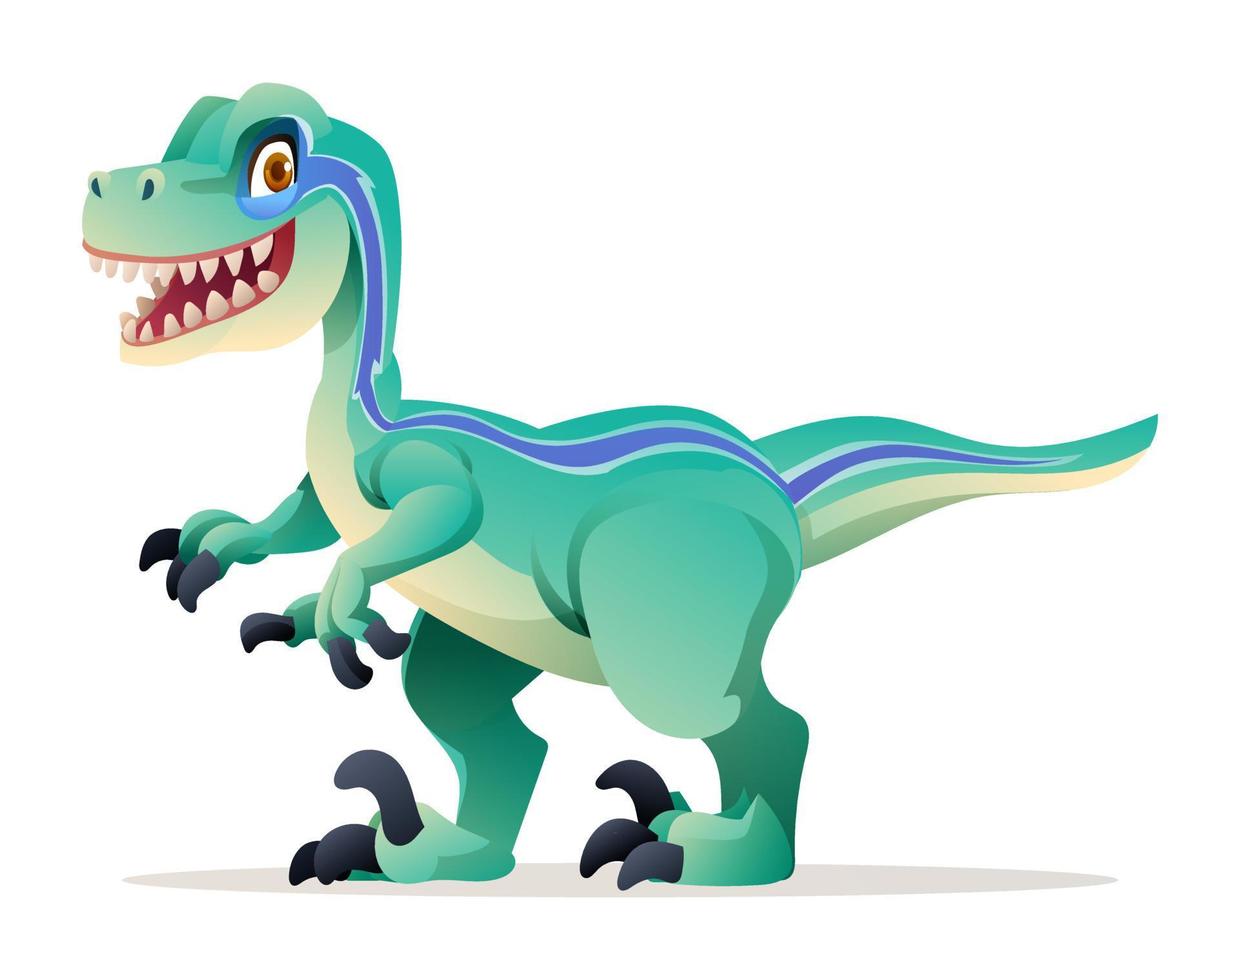 Cute velociraptor dinosaur cartoon illustration isolated on white background vector